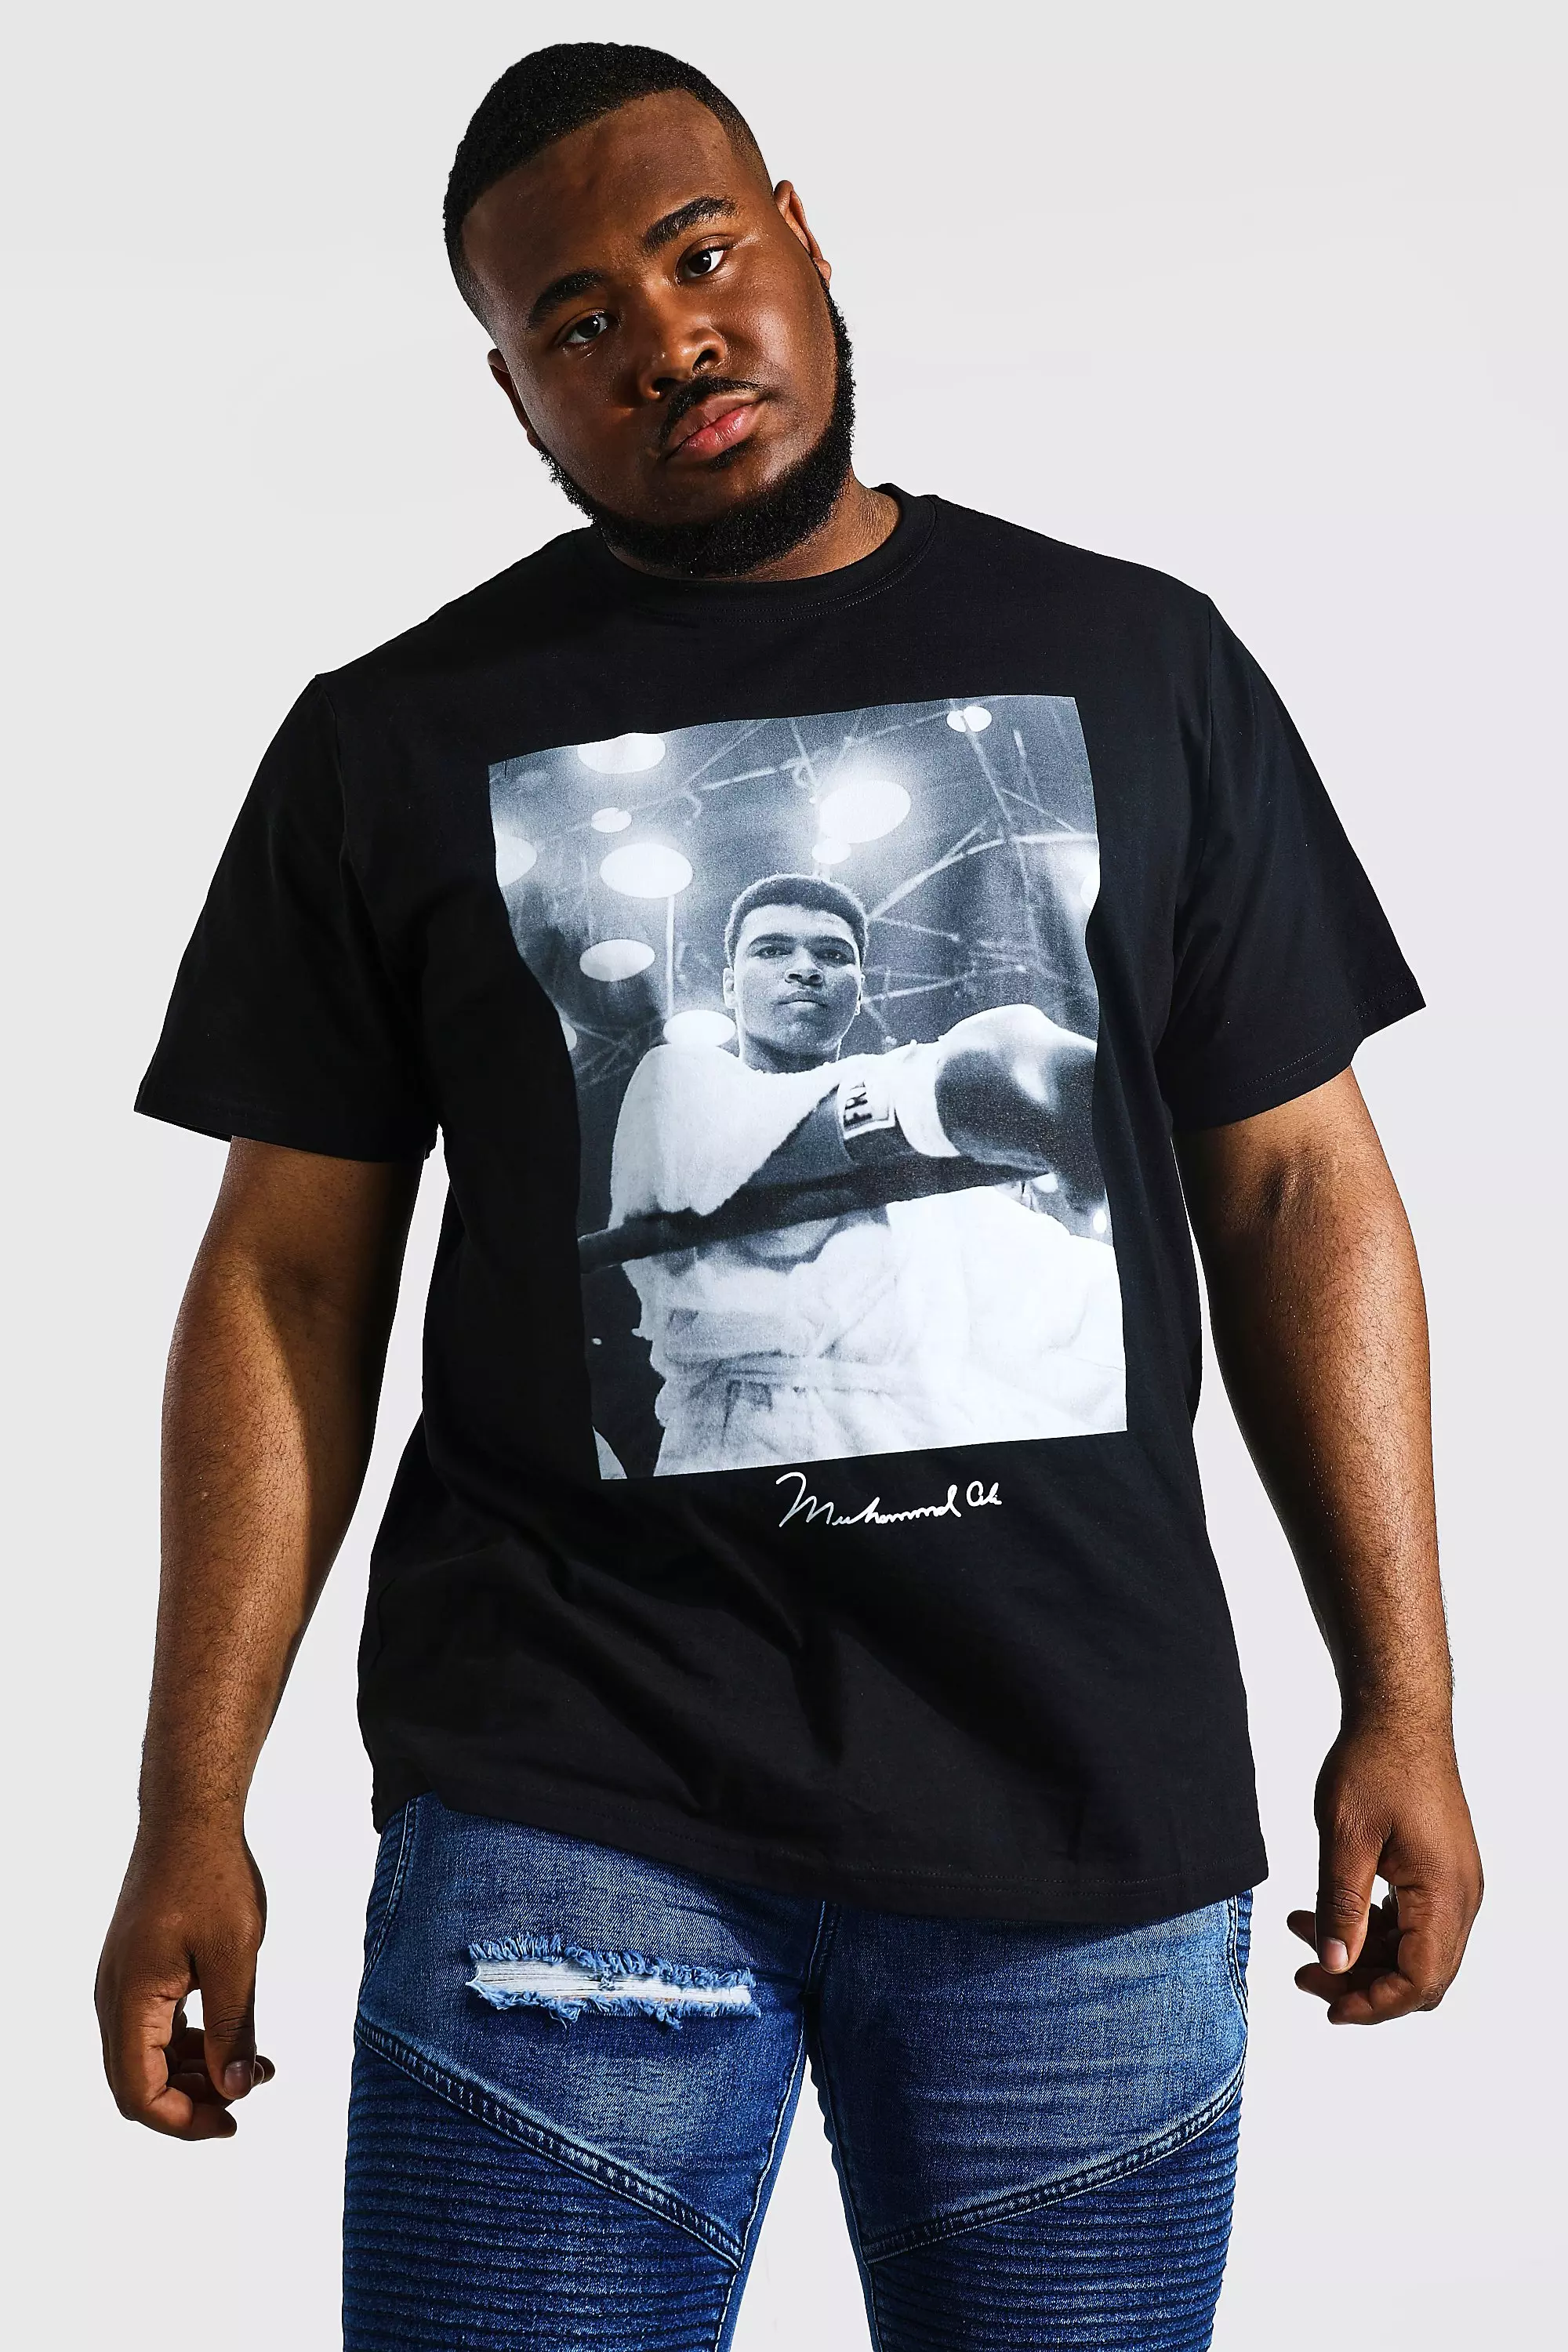 Plus Muhammad Ali Photo License T-shirt boohooMAN USA